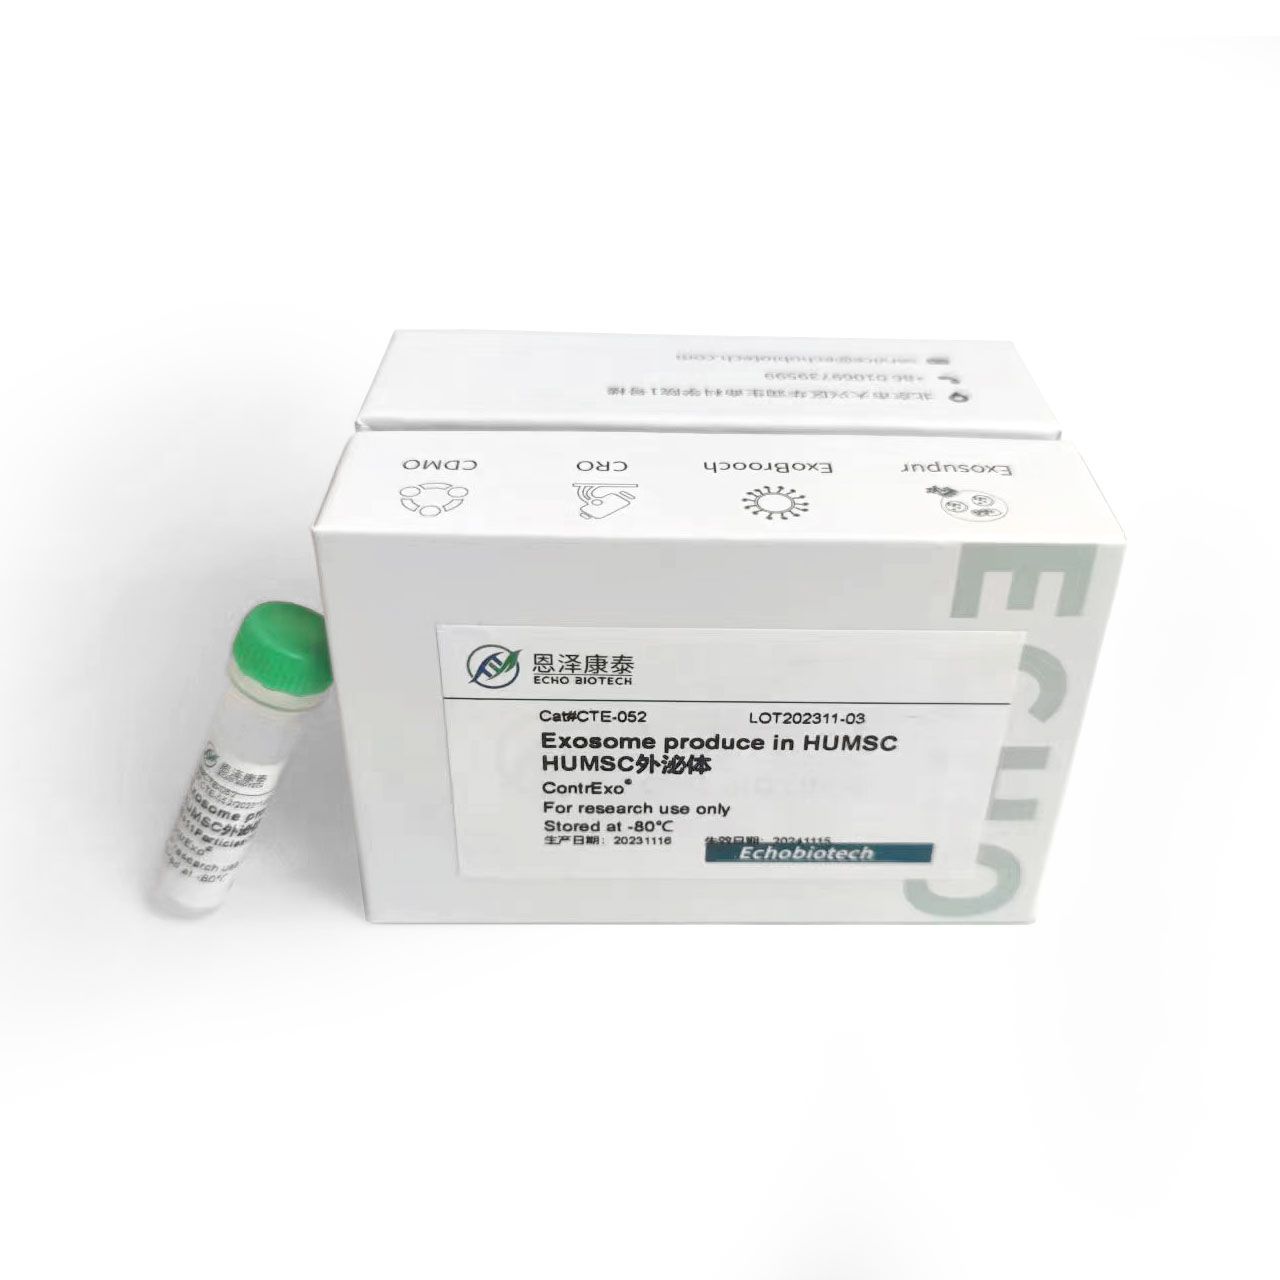 HUMSC干细胞外泌体-ContrExo®/高浓度高活性现货产品